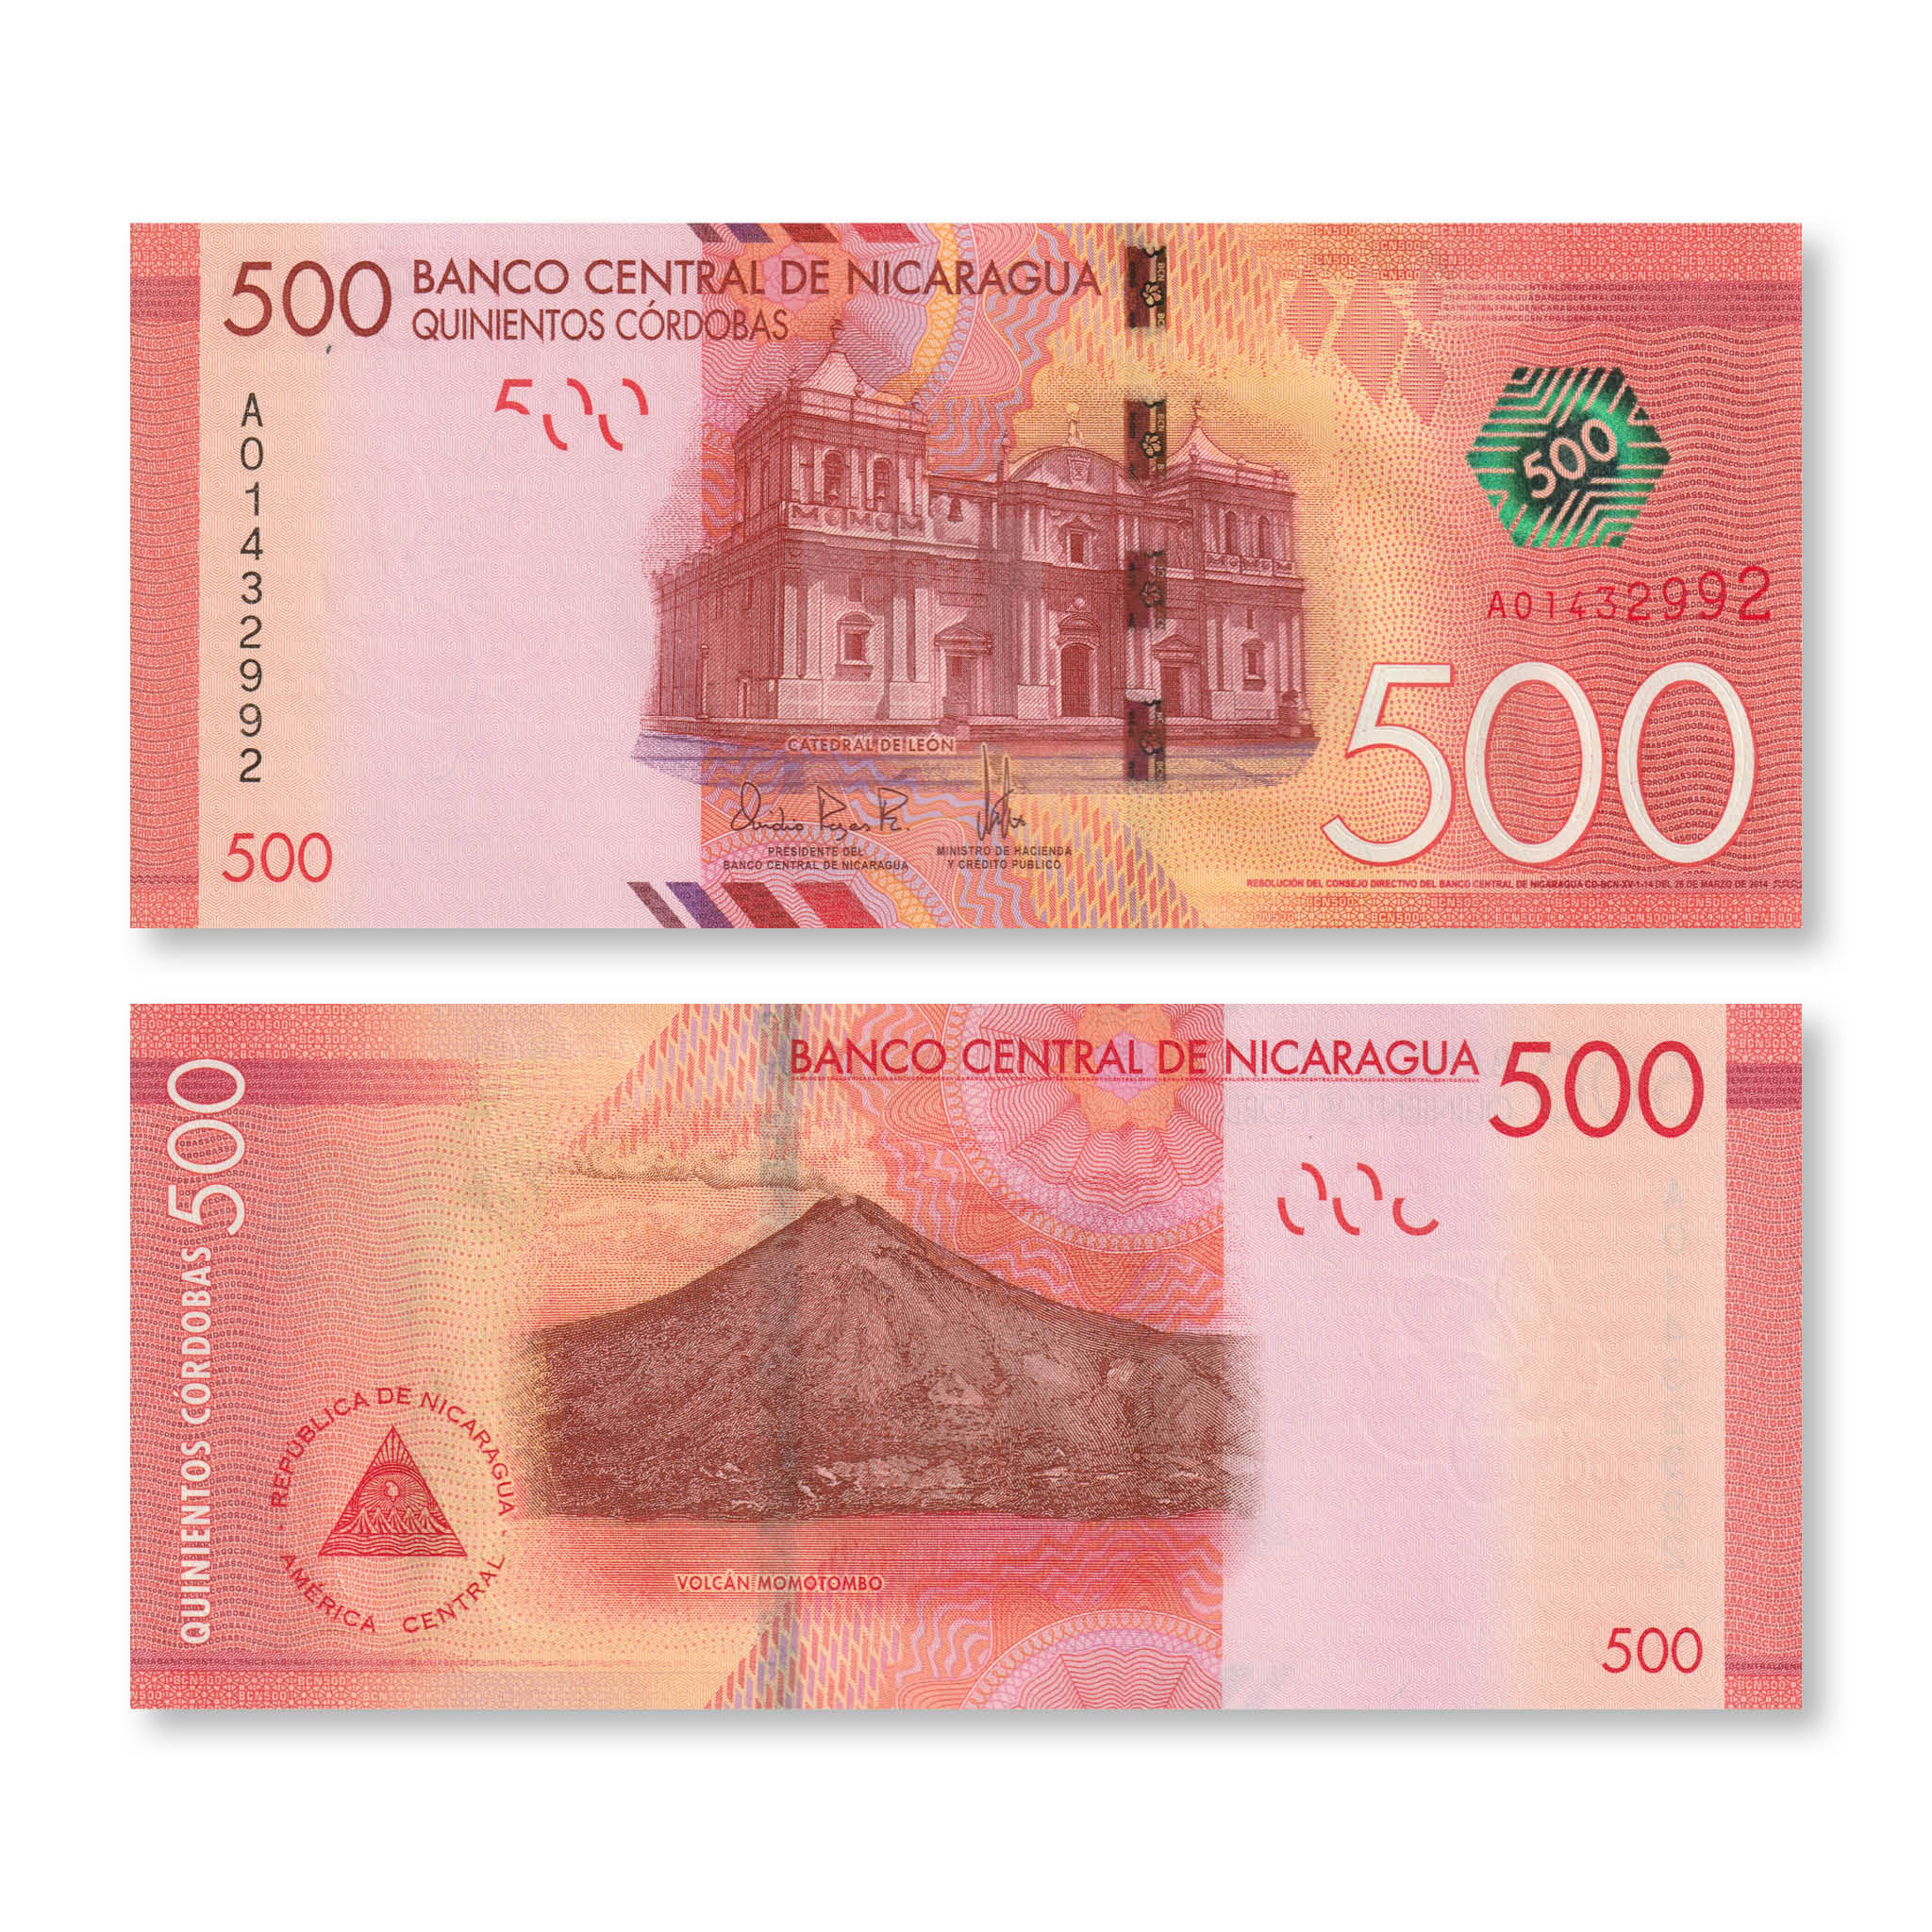 Nicaragua 500 Córdobas, 2014, B511a, P214a, UNC - Robert's World Money - World Banknotes